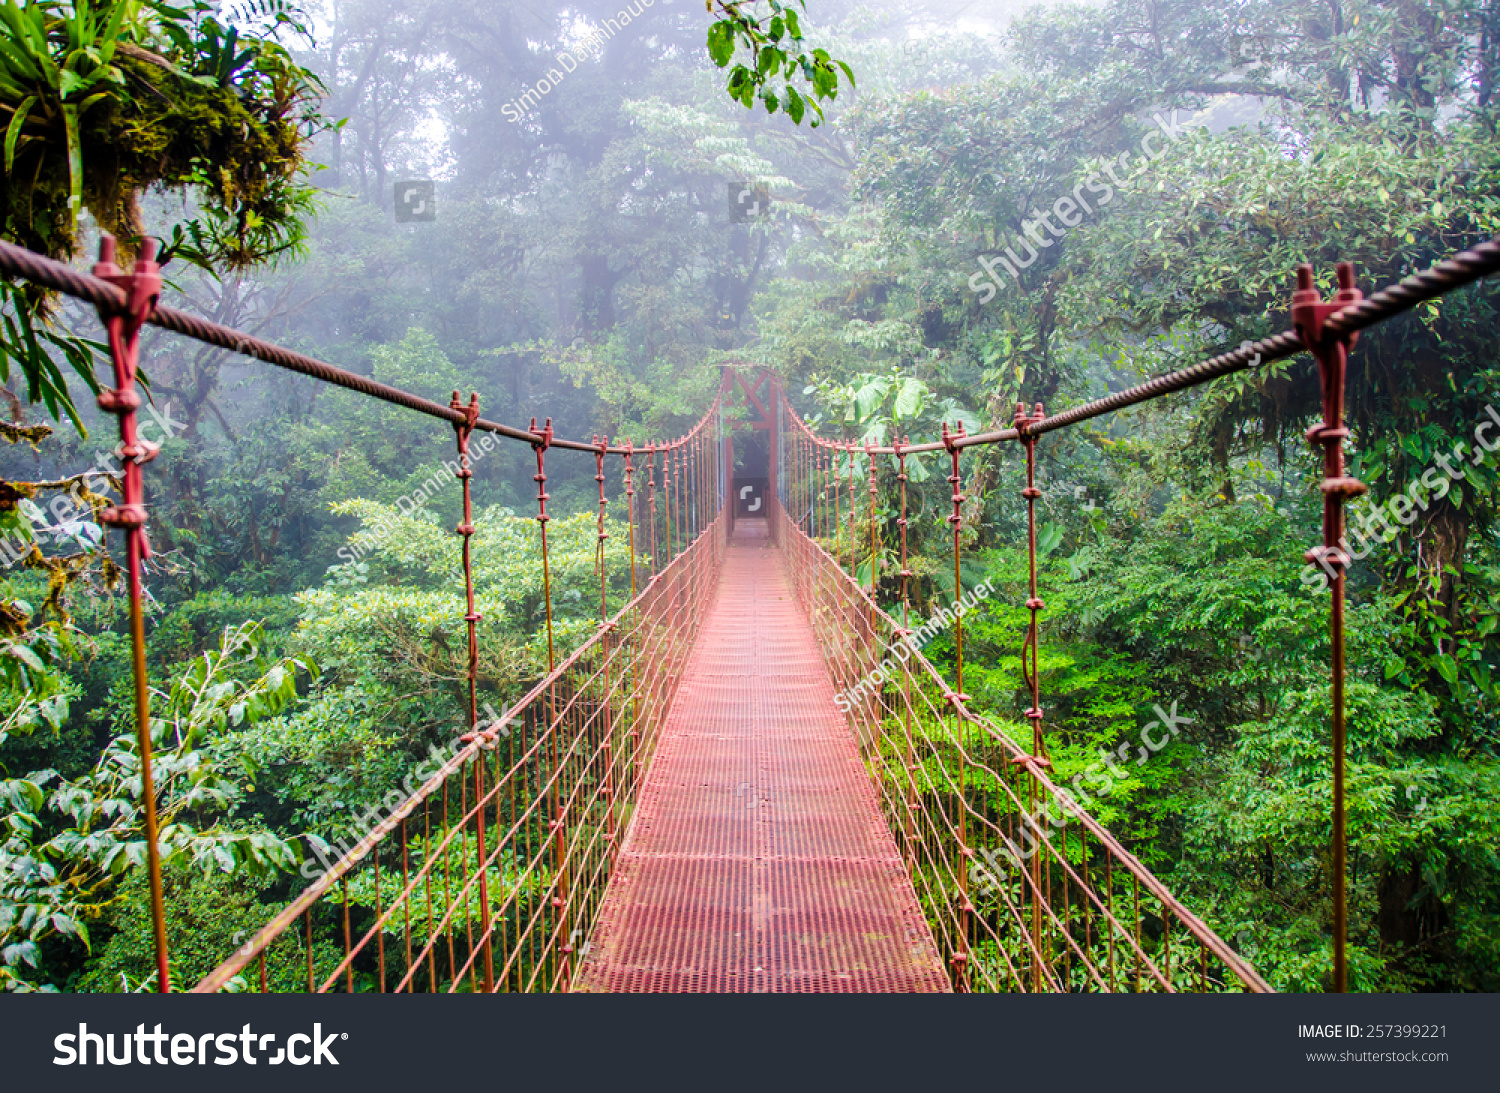 Bridge in Rainforest - Costa Rica - Monteverde #257399221